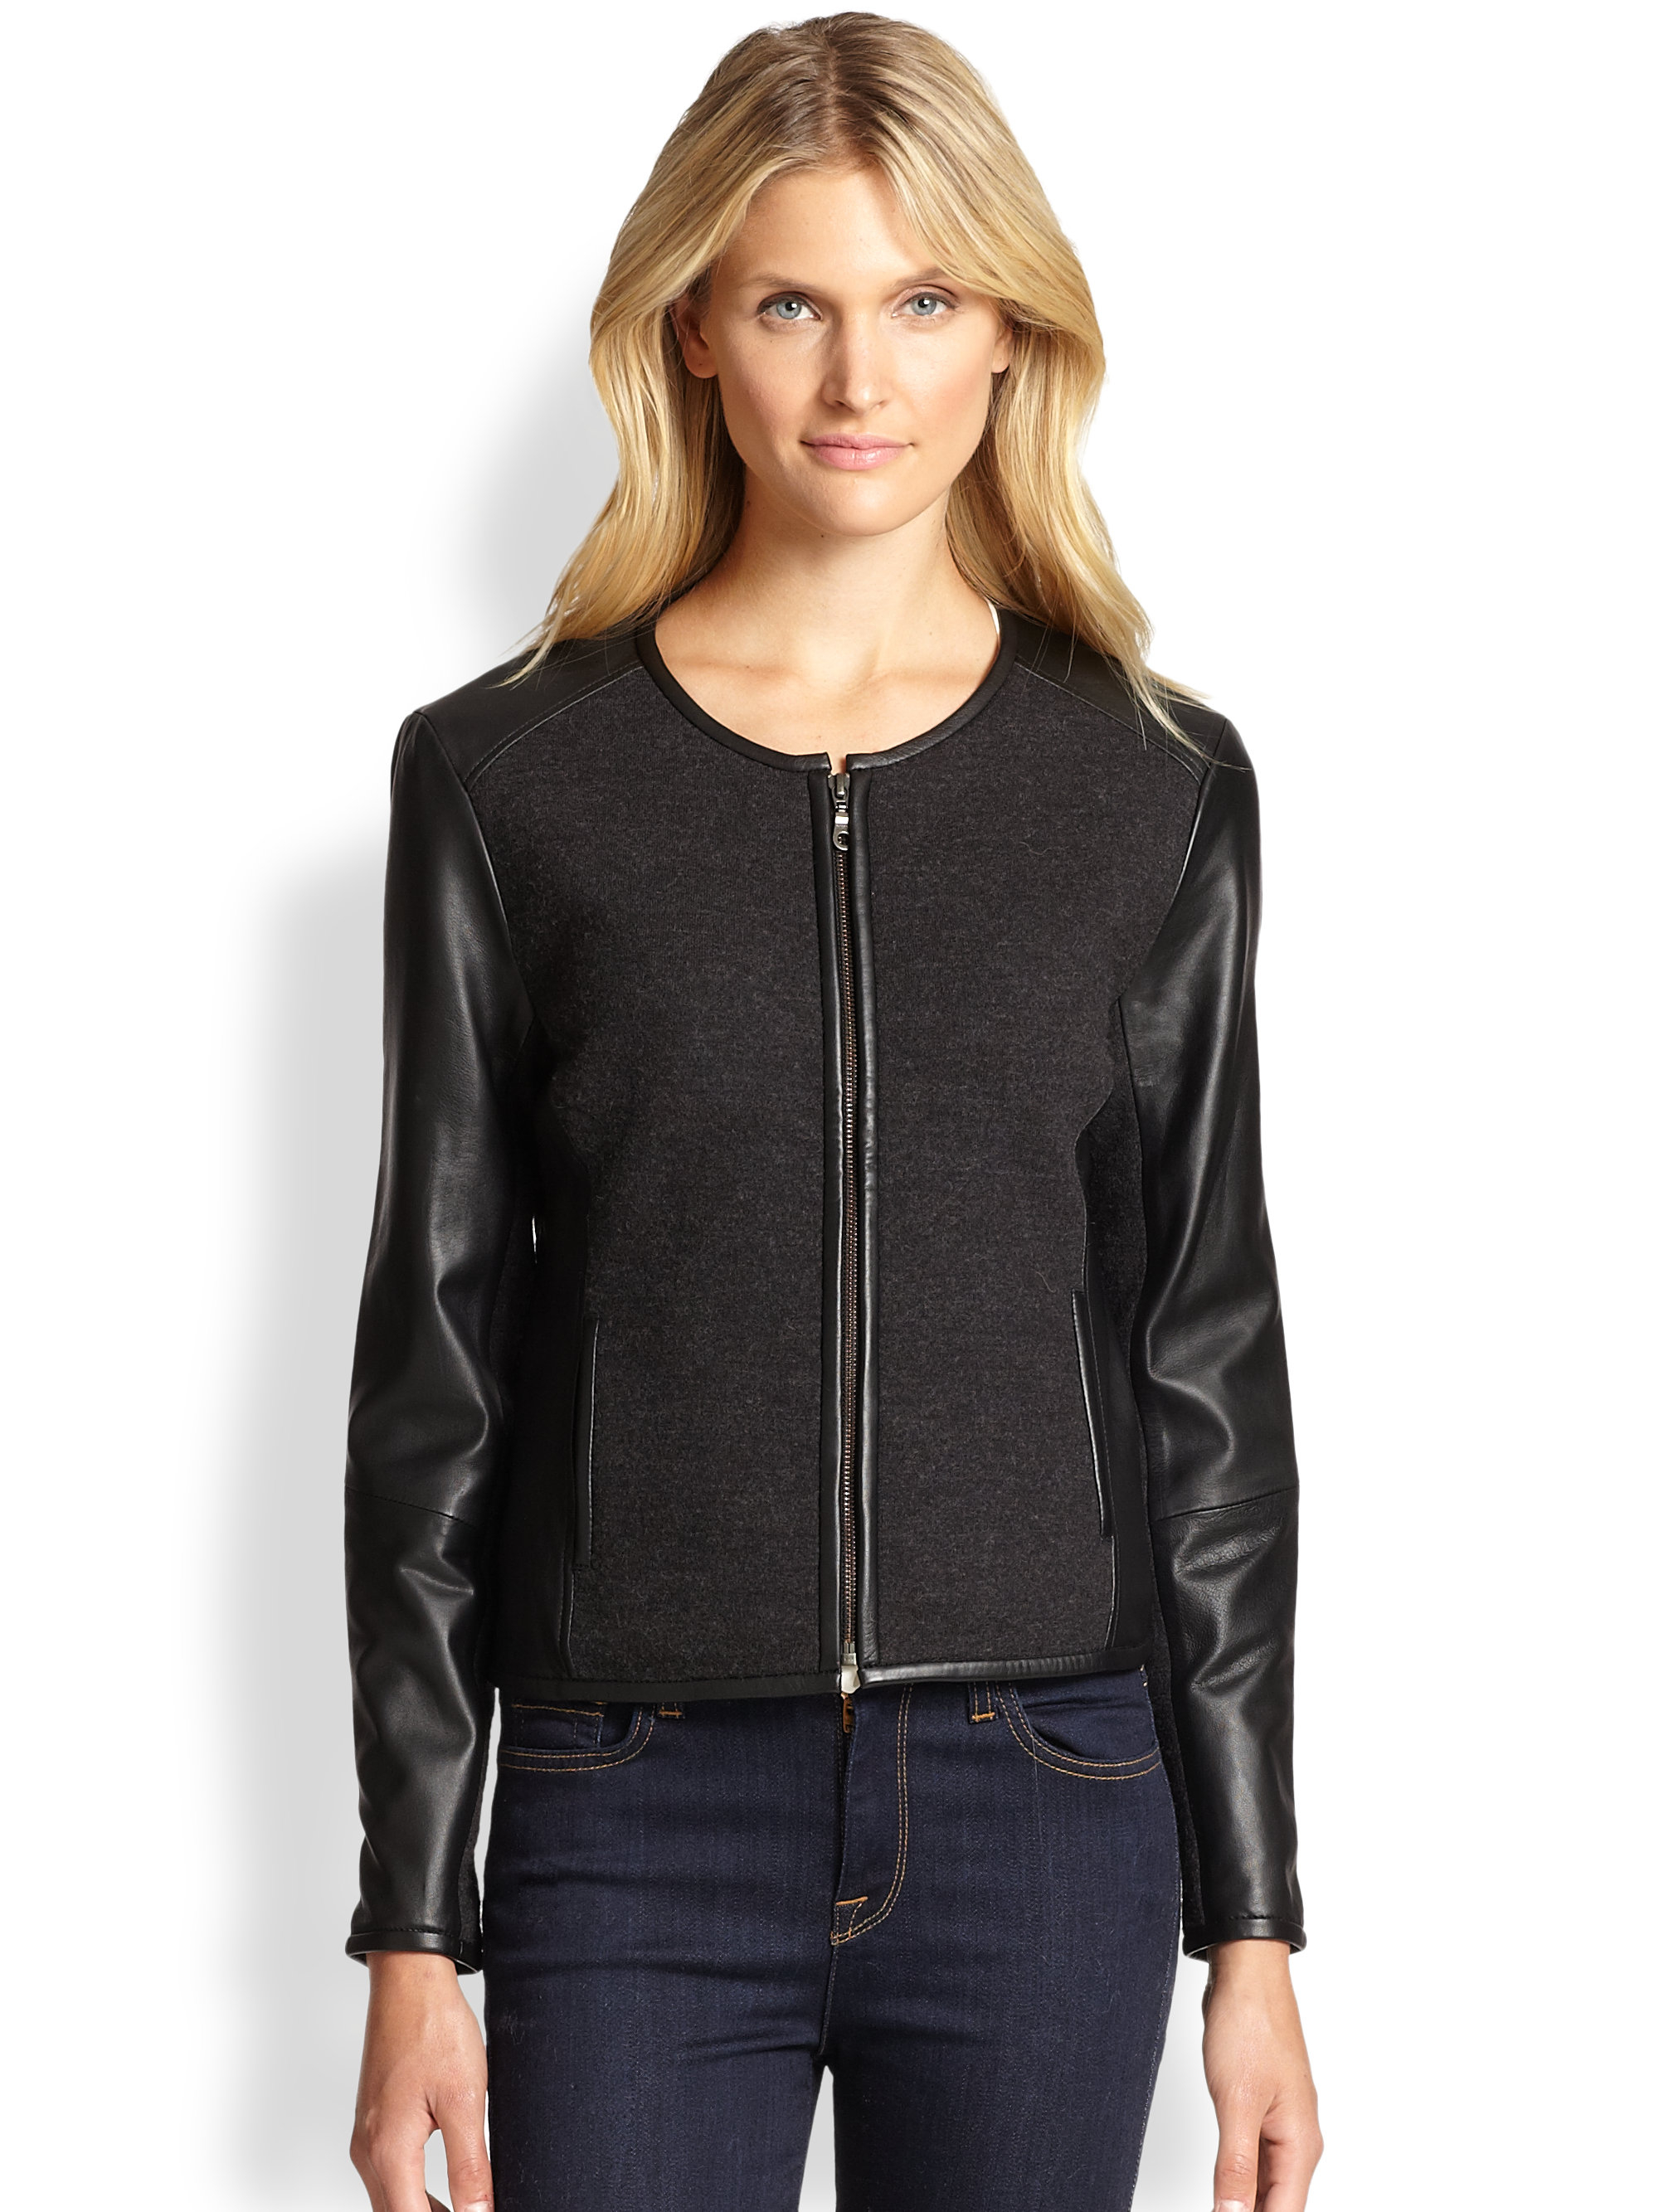 Lyst - Eileen Fisher Merino & Leather Jacket in Black